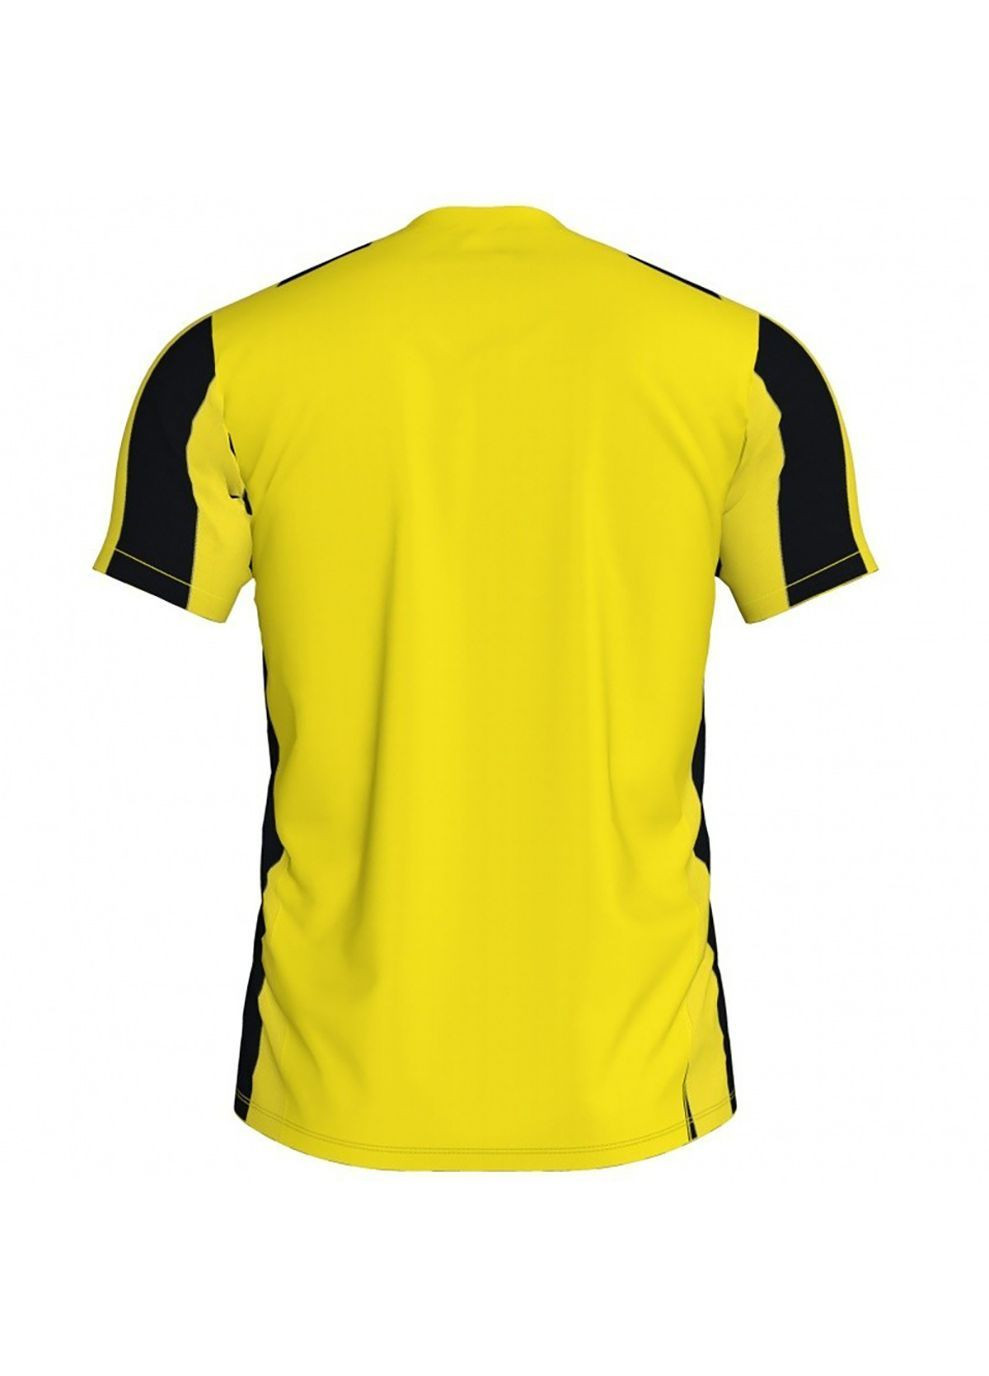 Желтая футболка inter t-shirt s/s желтый,черный-3xl Joma